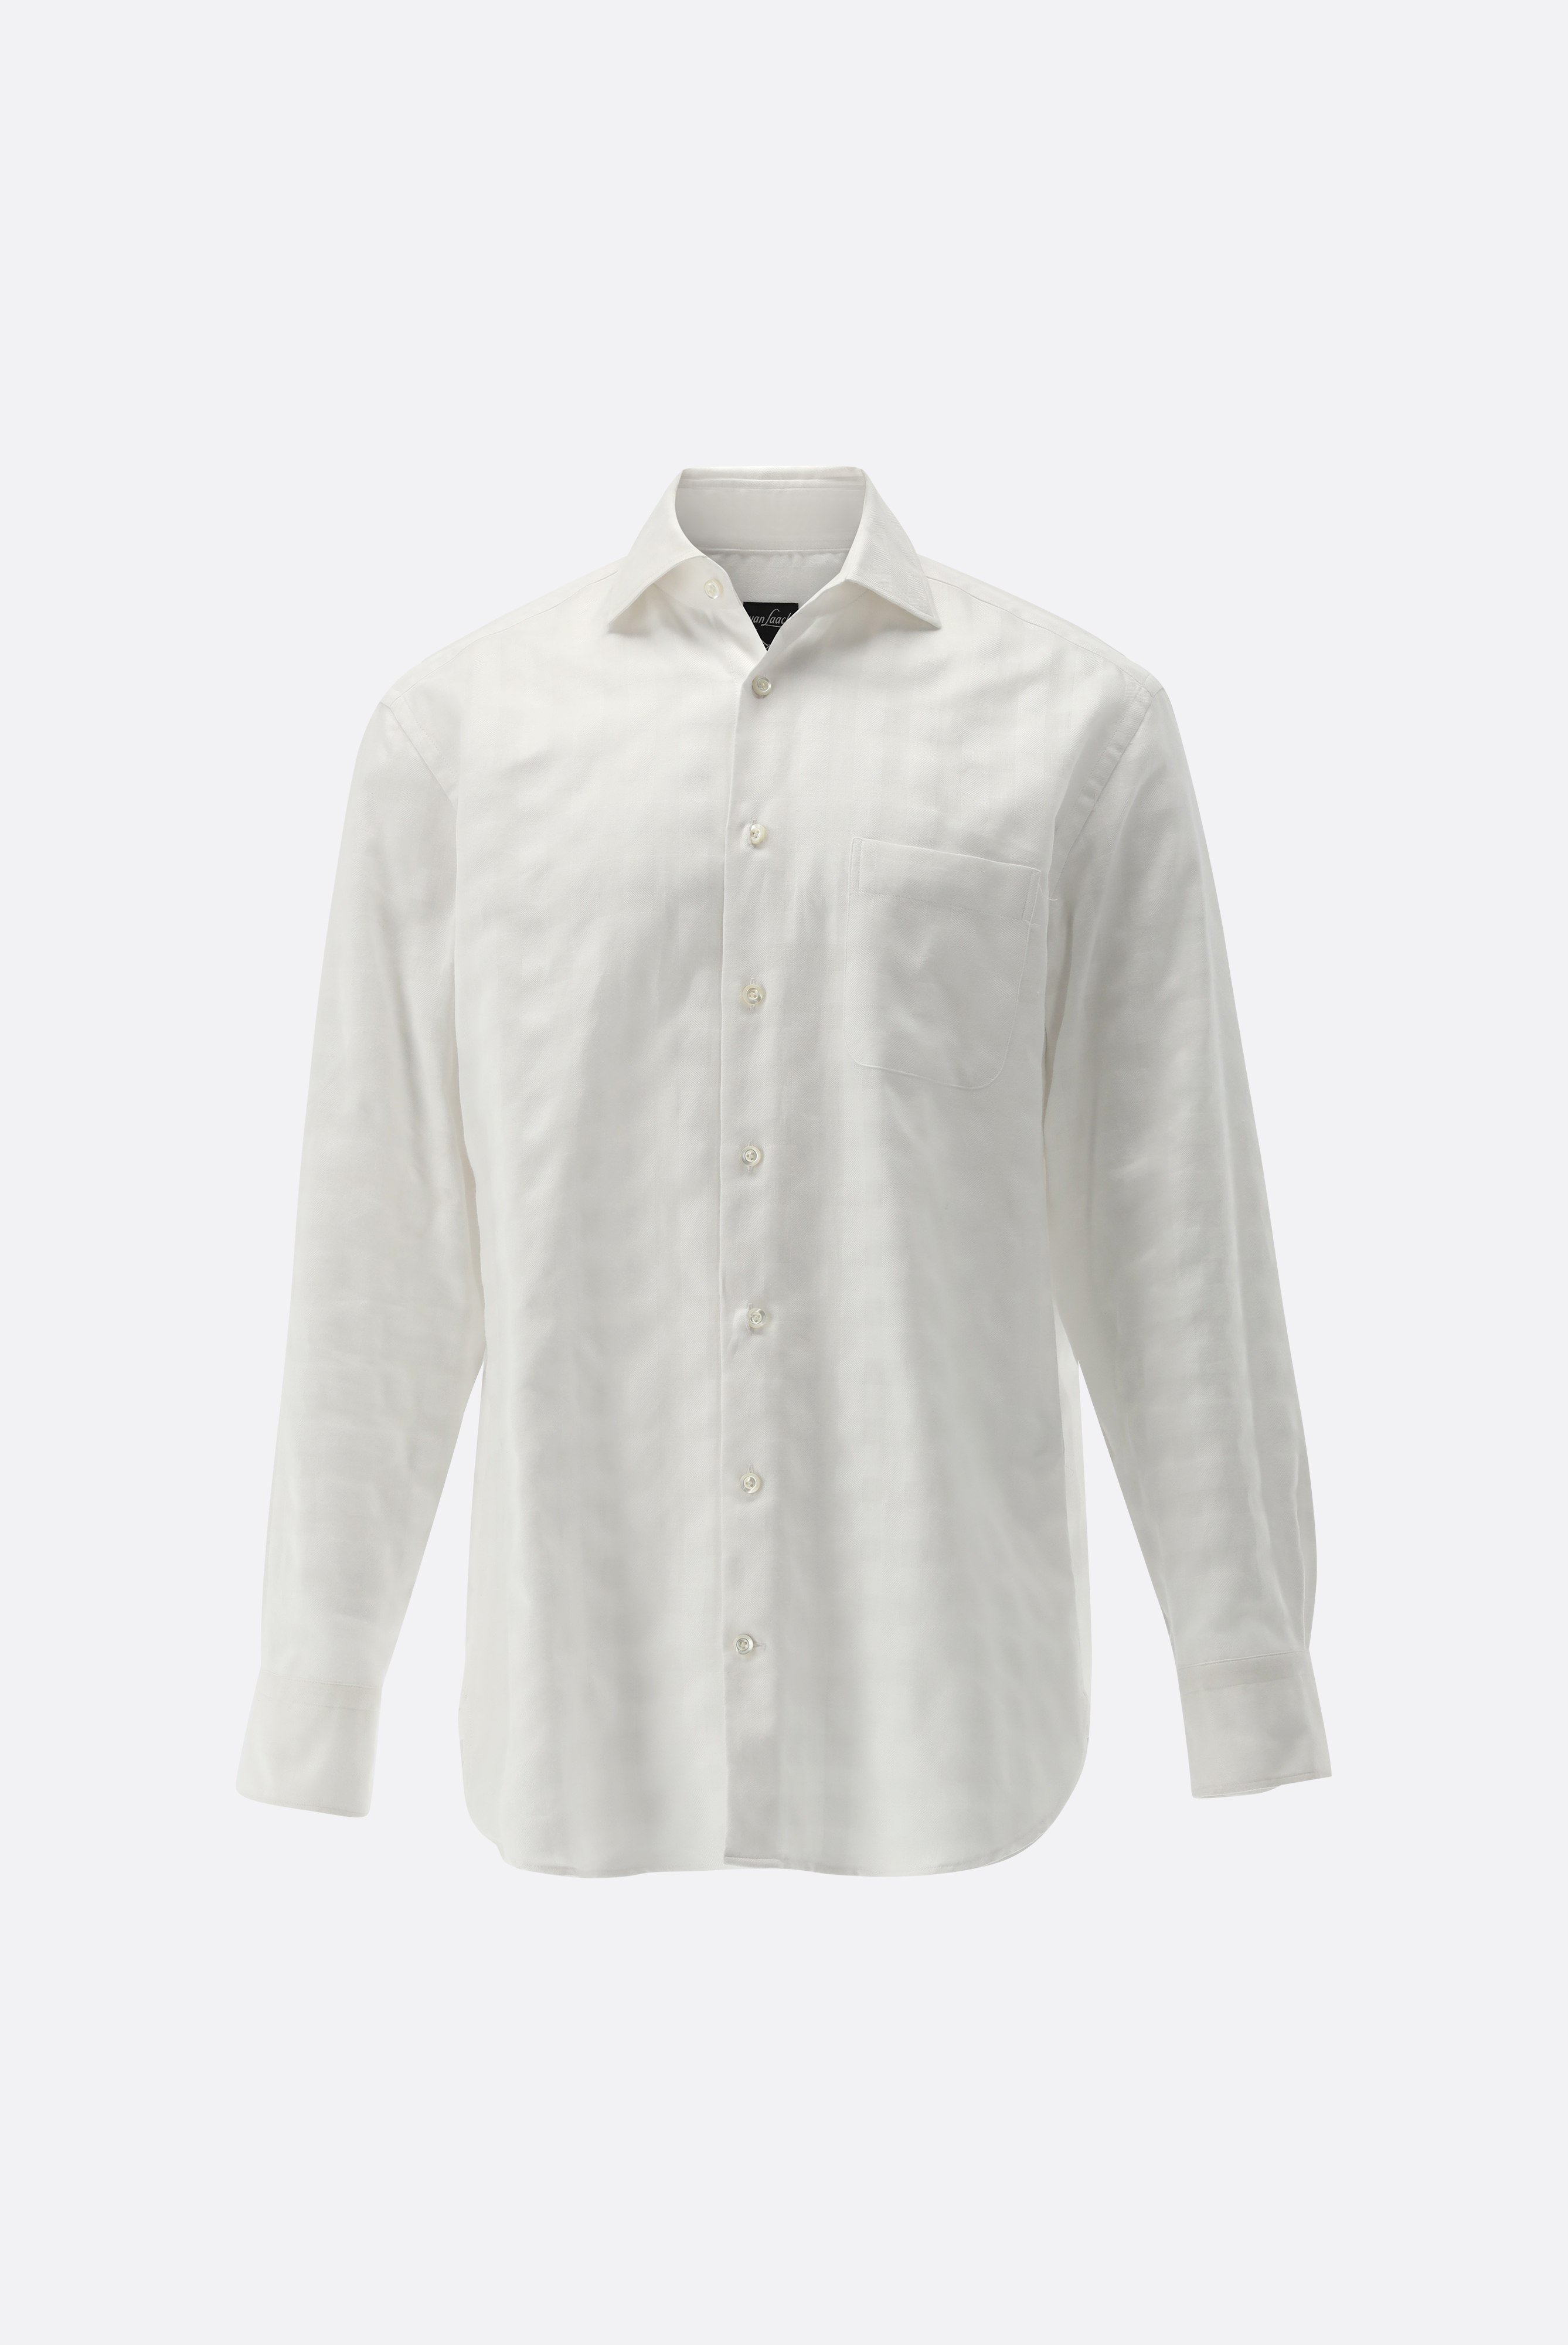 Casual Shirts+Checked twill shirt Comfort Fit+20.2021.AV.151021.000.39